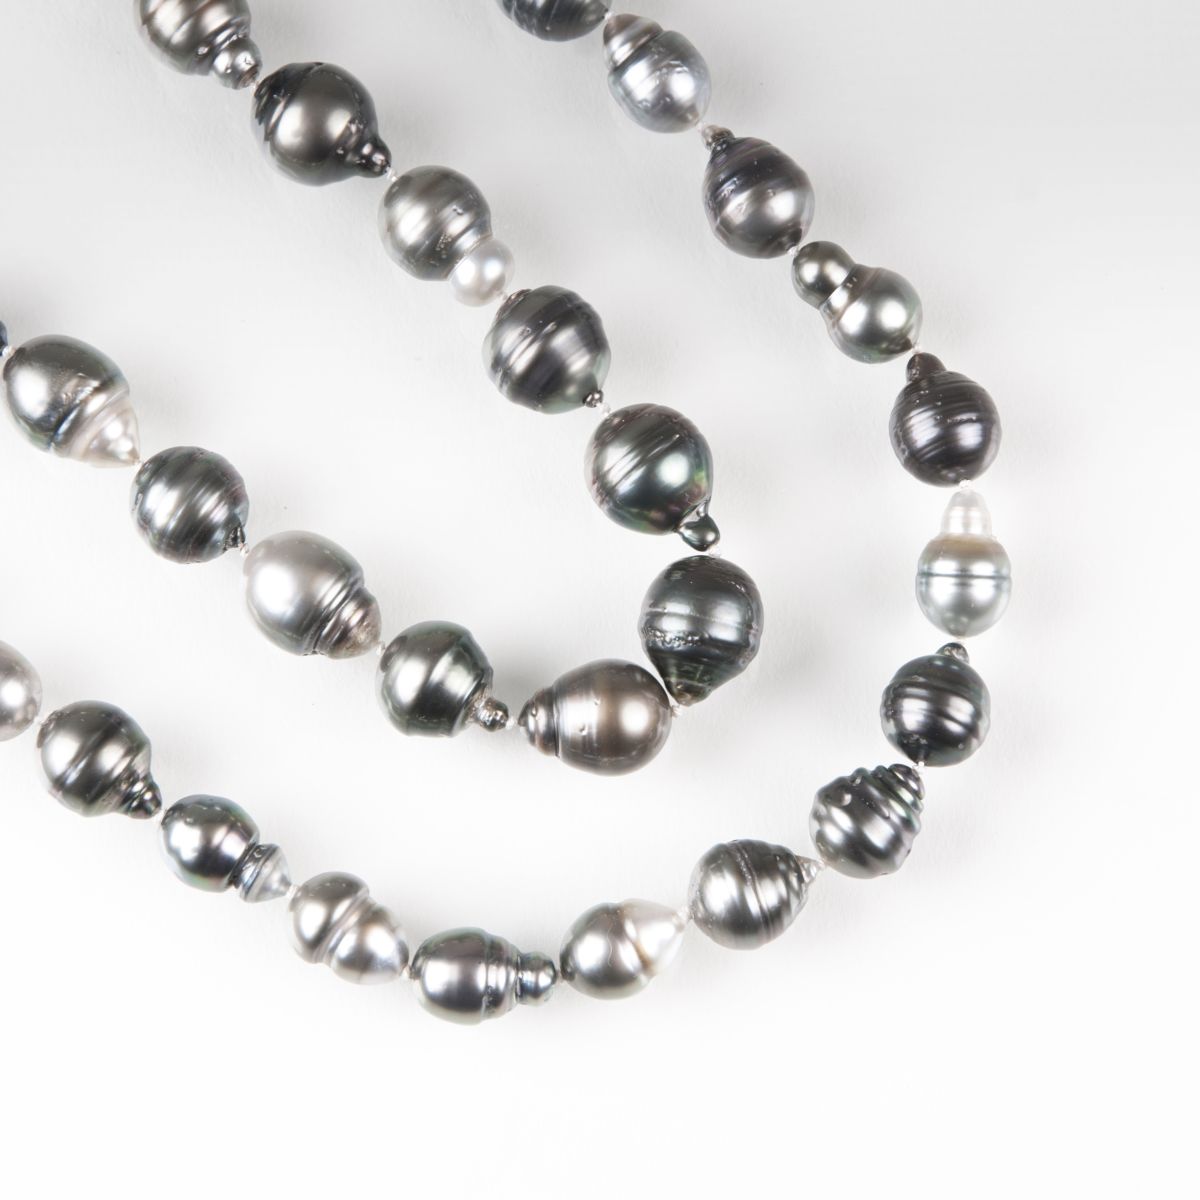 A long Tahiti pearl necklace